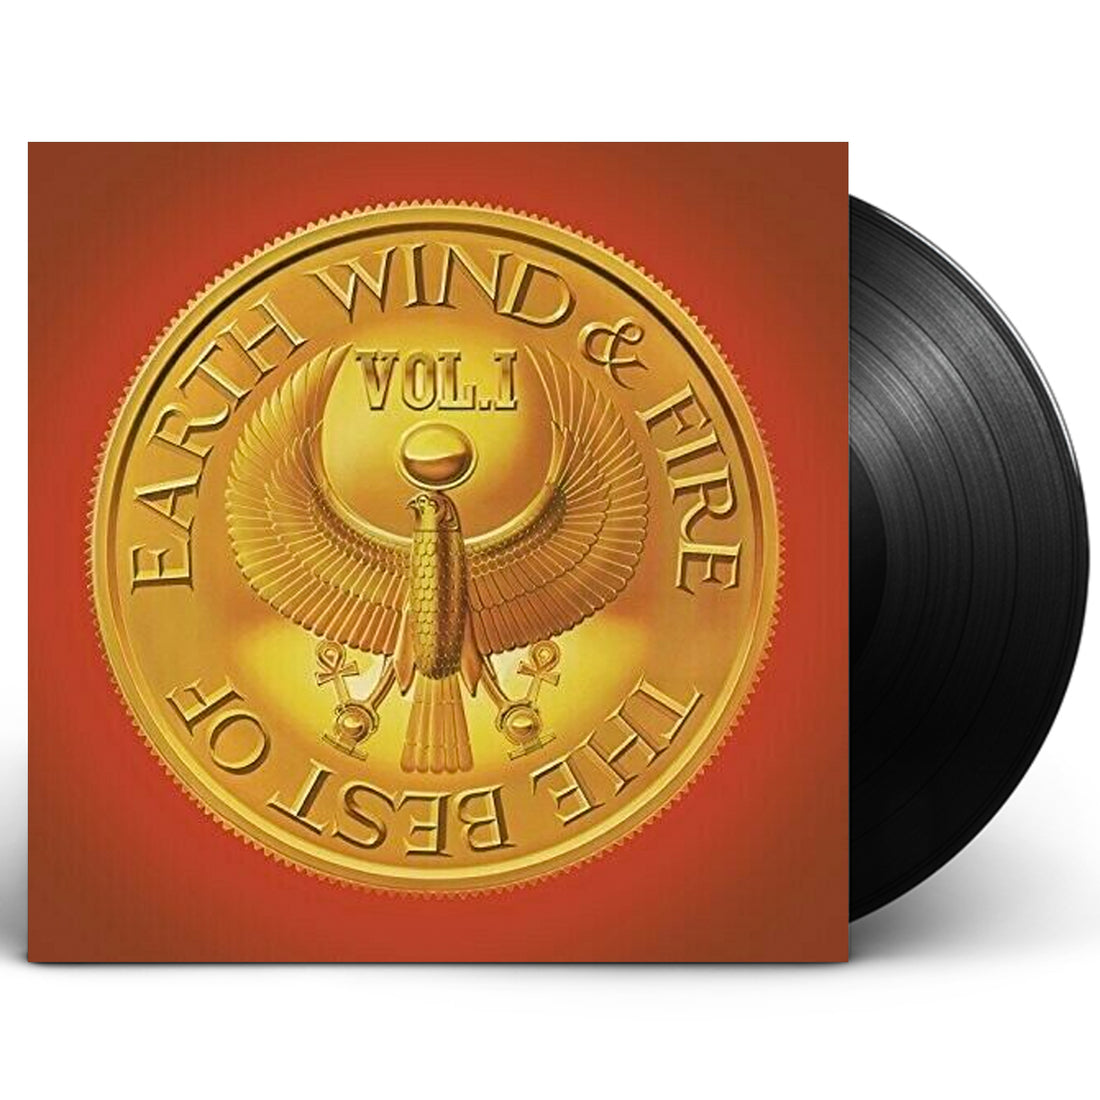 Earth Wind & Fire "Best of Volume 1" LP Vinyl